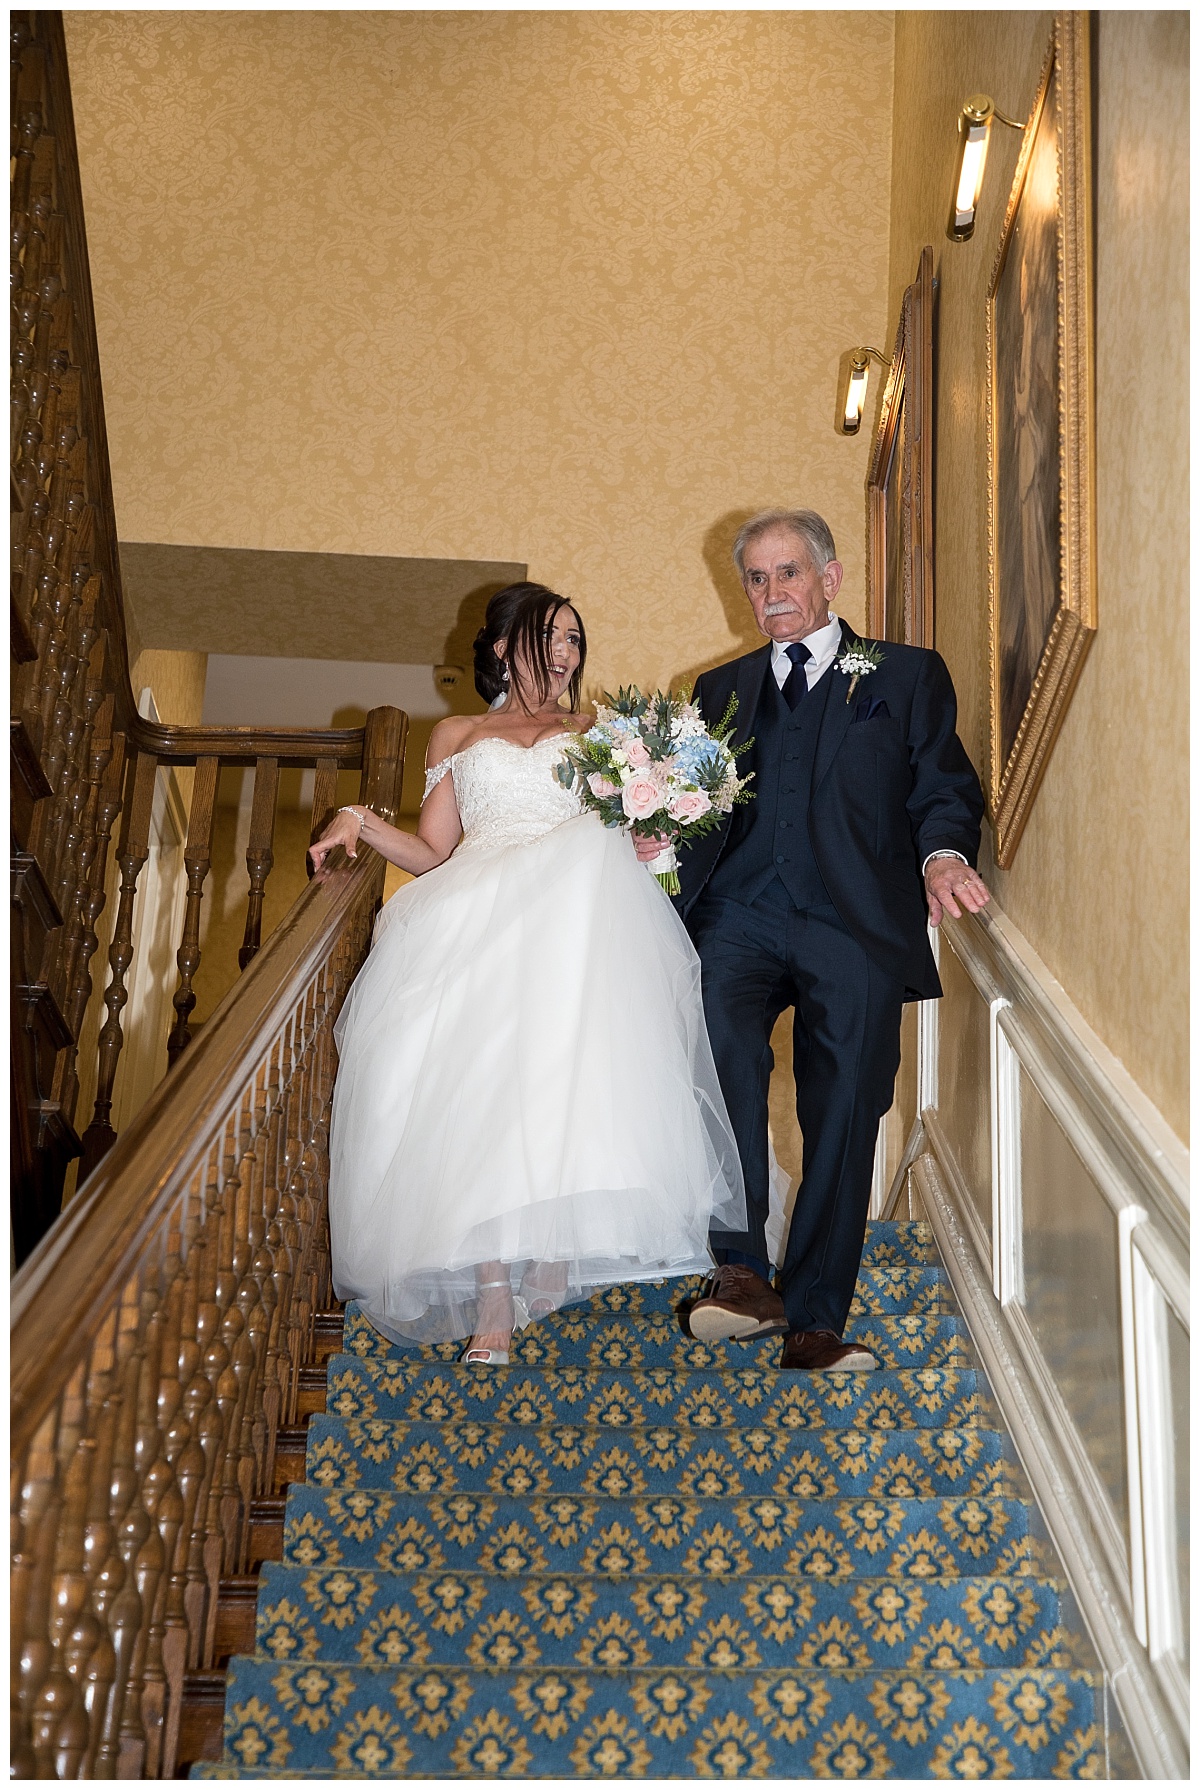 Wedding Photography Manchester - Emma and Craig's Cranage Hall Wedding 38